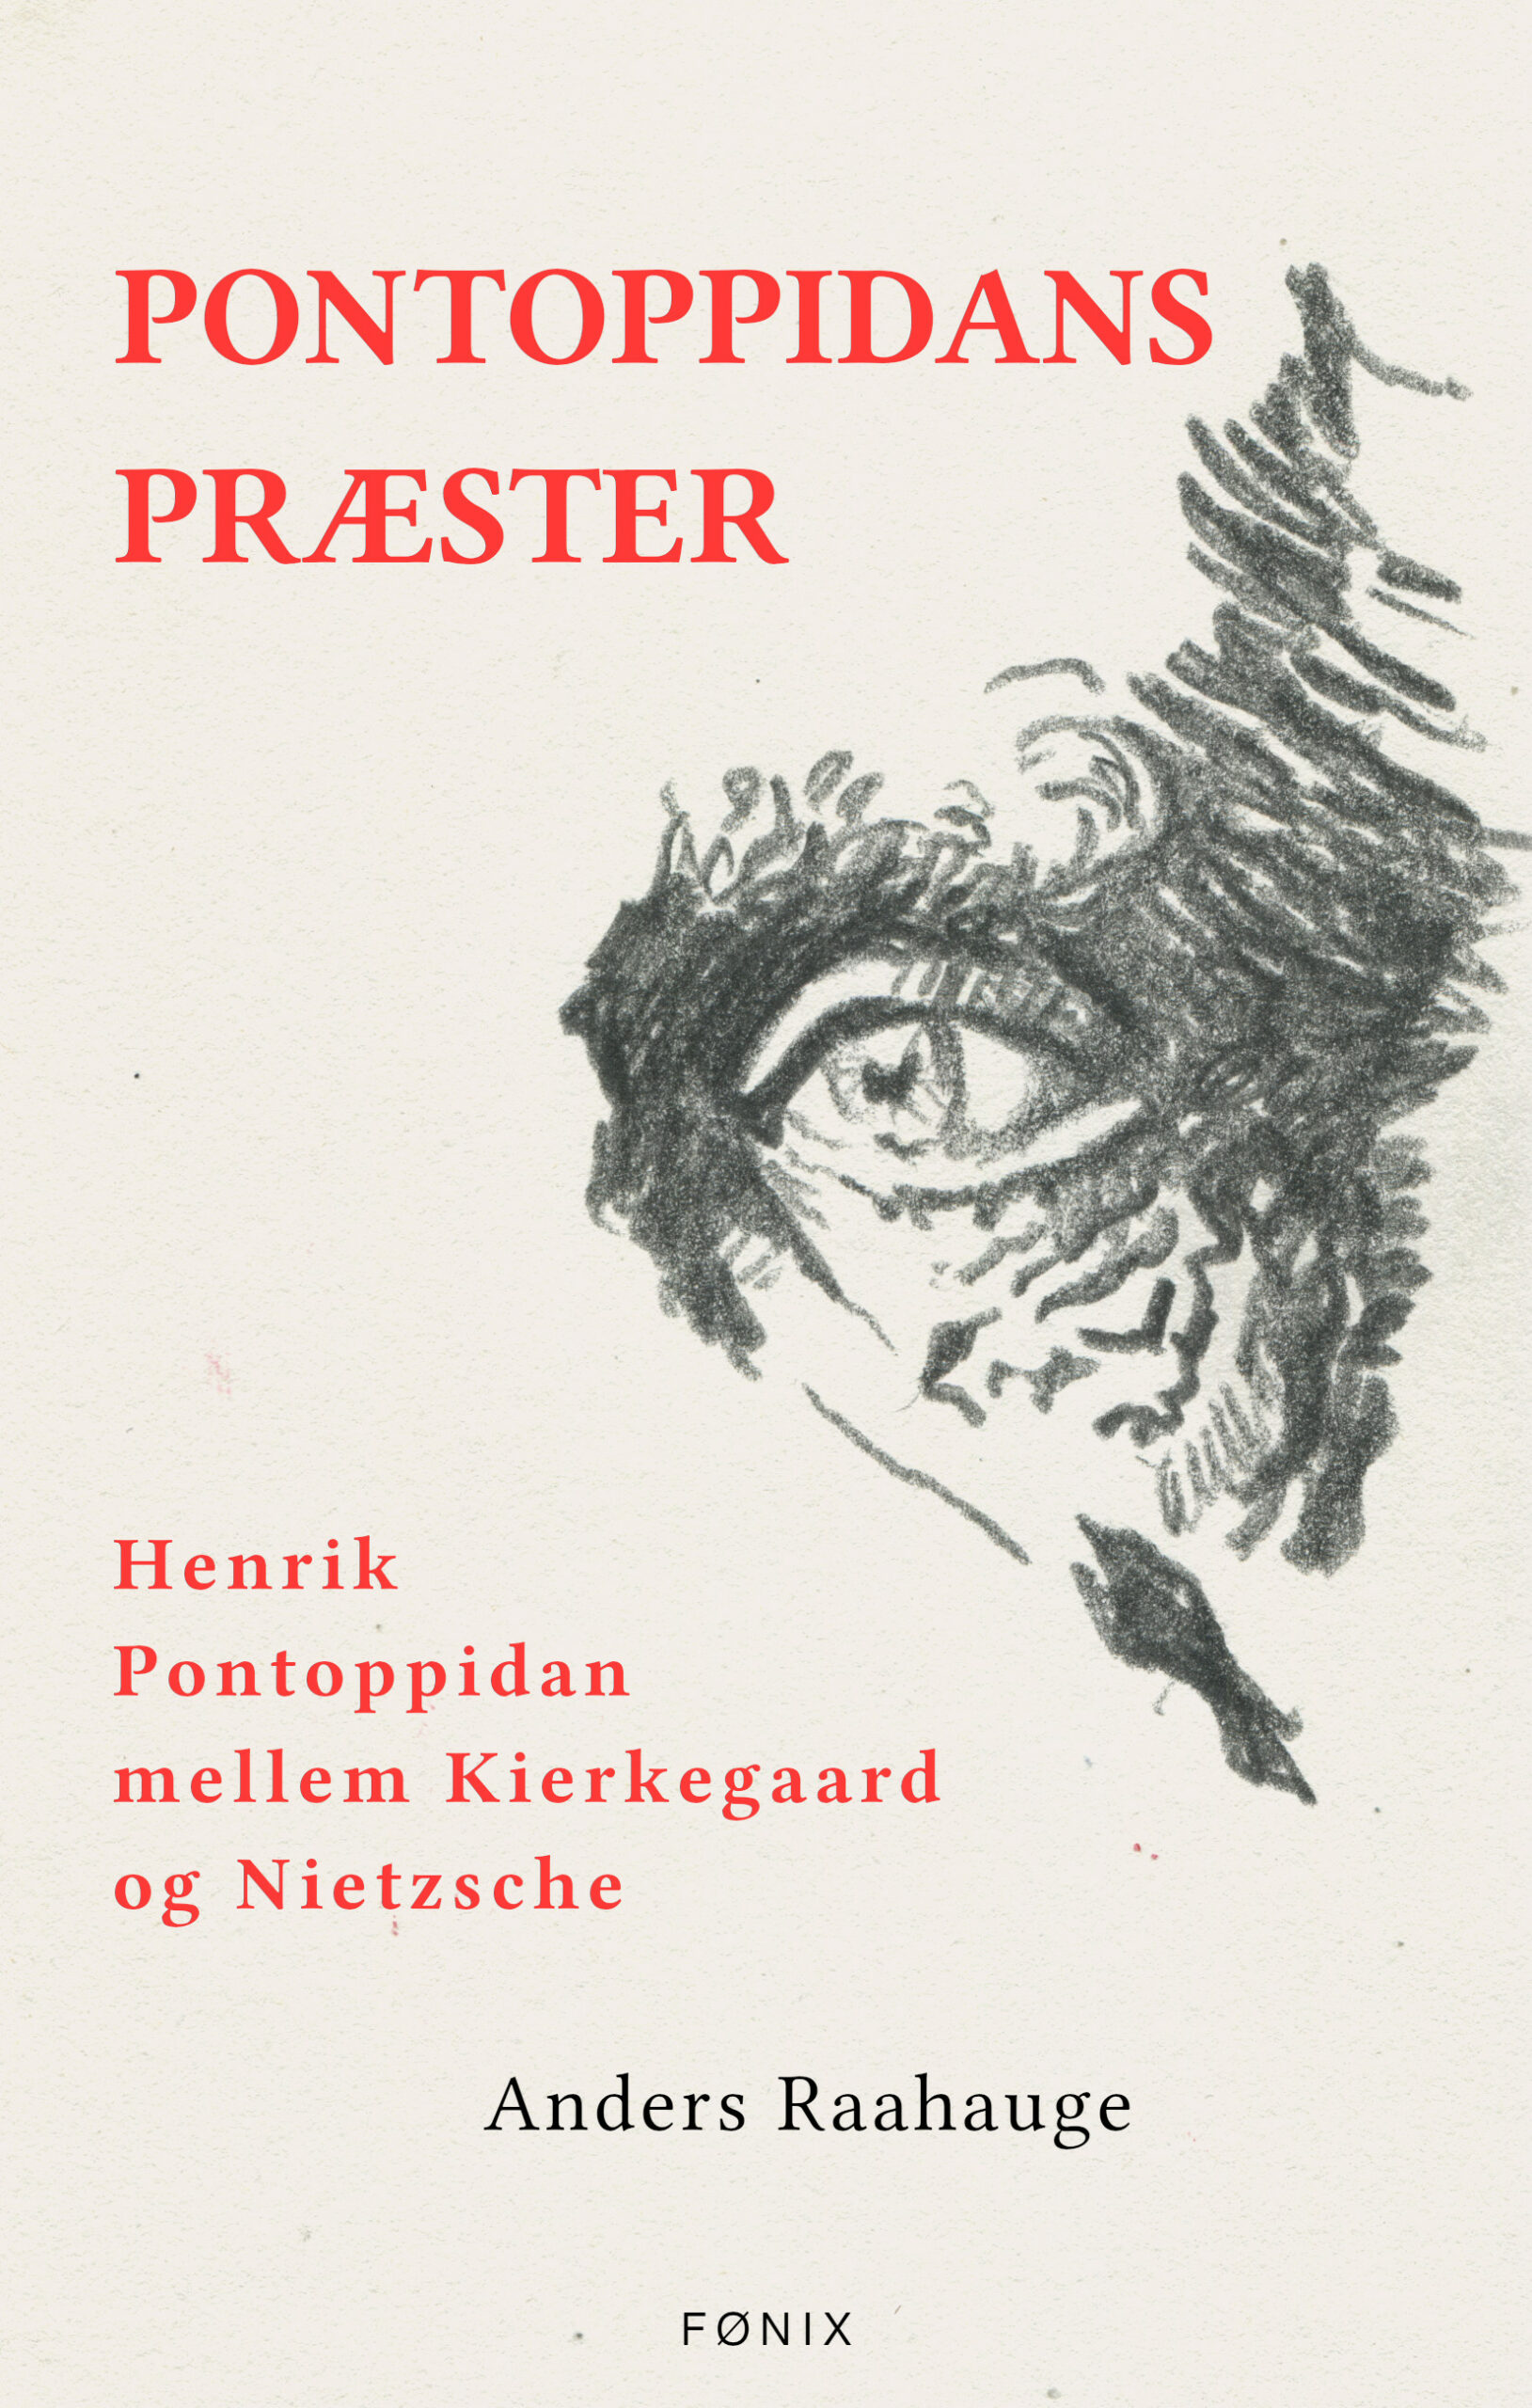 Pontoppidans præster – Henrik Pontoppidan mellem Kierkegaard og Nietzsche